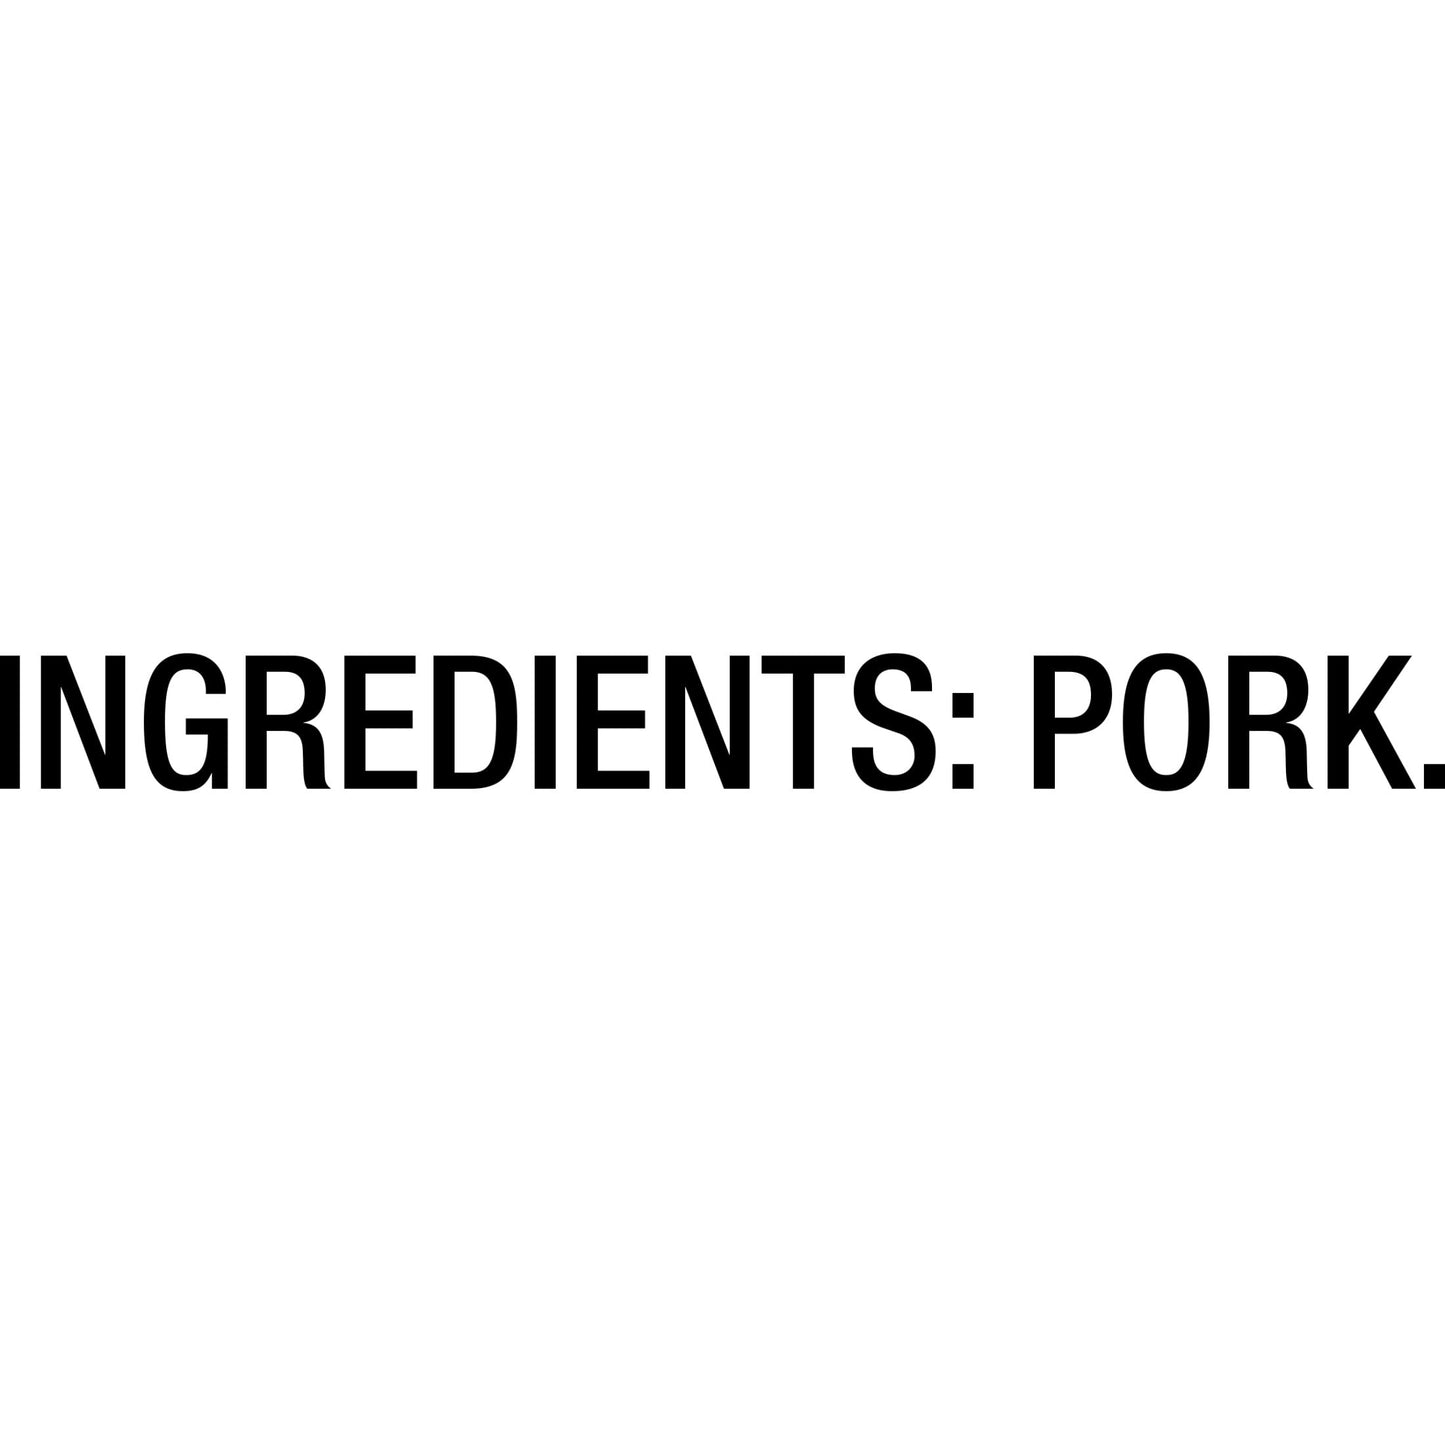 Pork Center Cut Loin Chops Thin Boneless Family Pack, 2.0 - 3.2 lb Tray